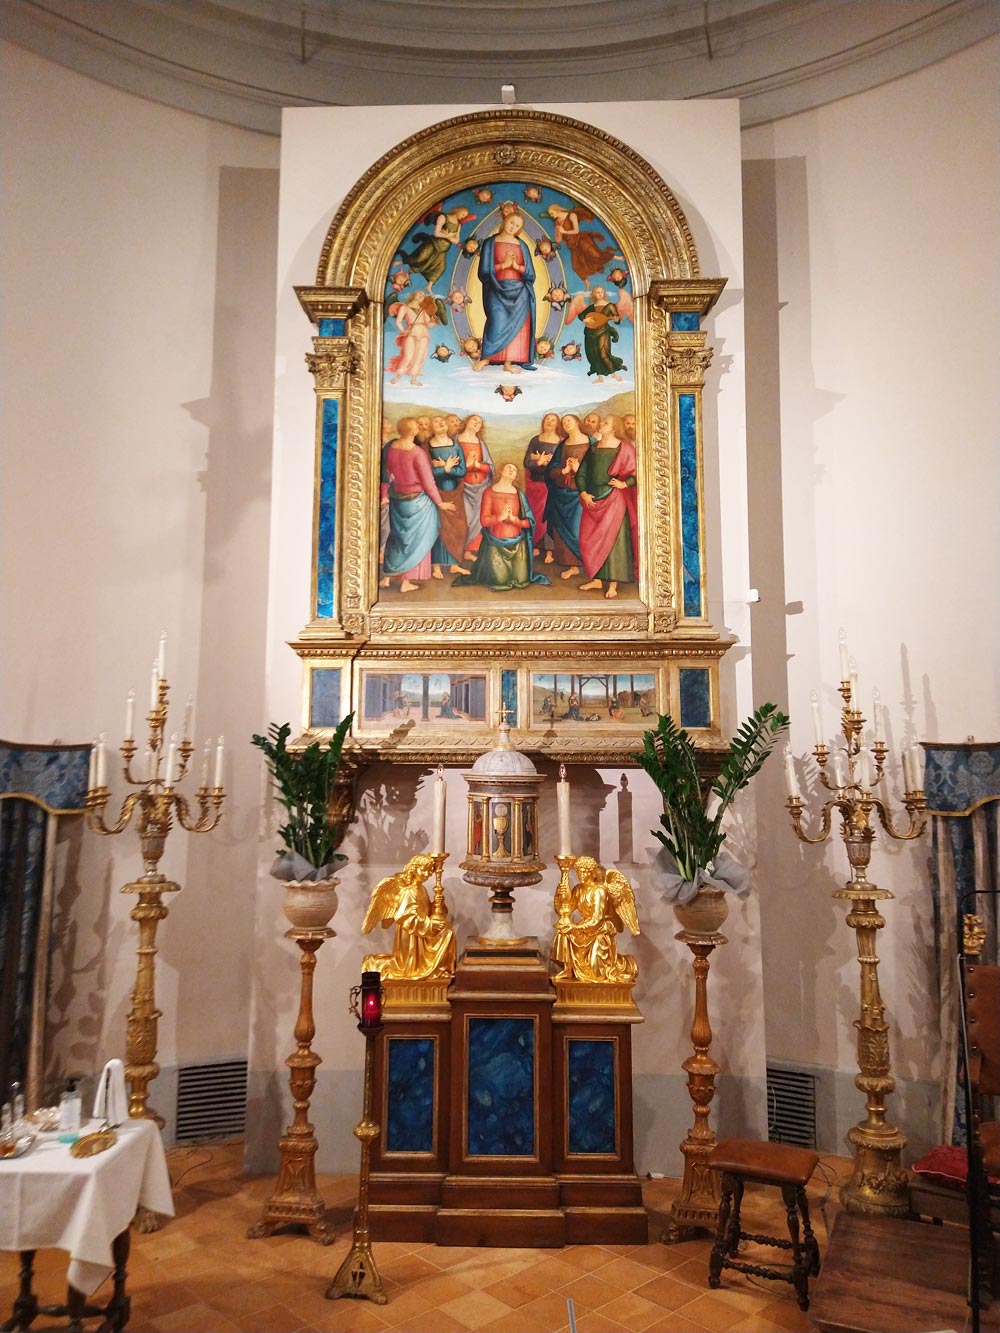 The Corciano Altarpiece. Photo: Windows on Art